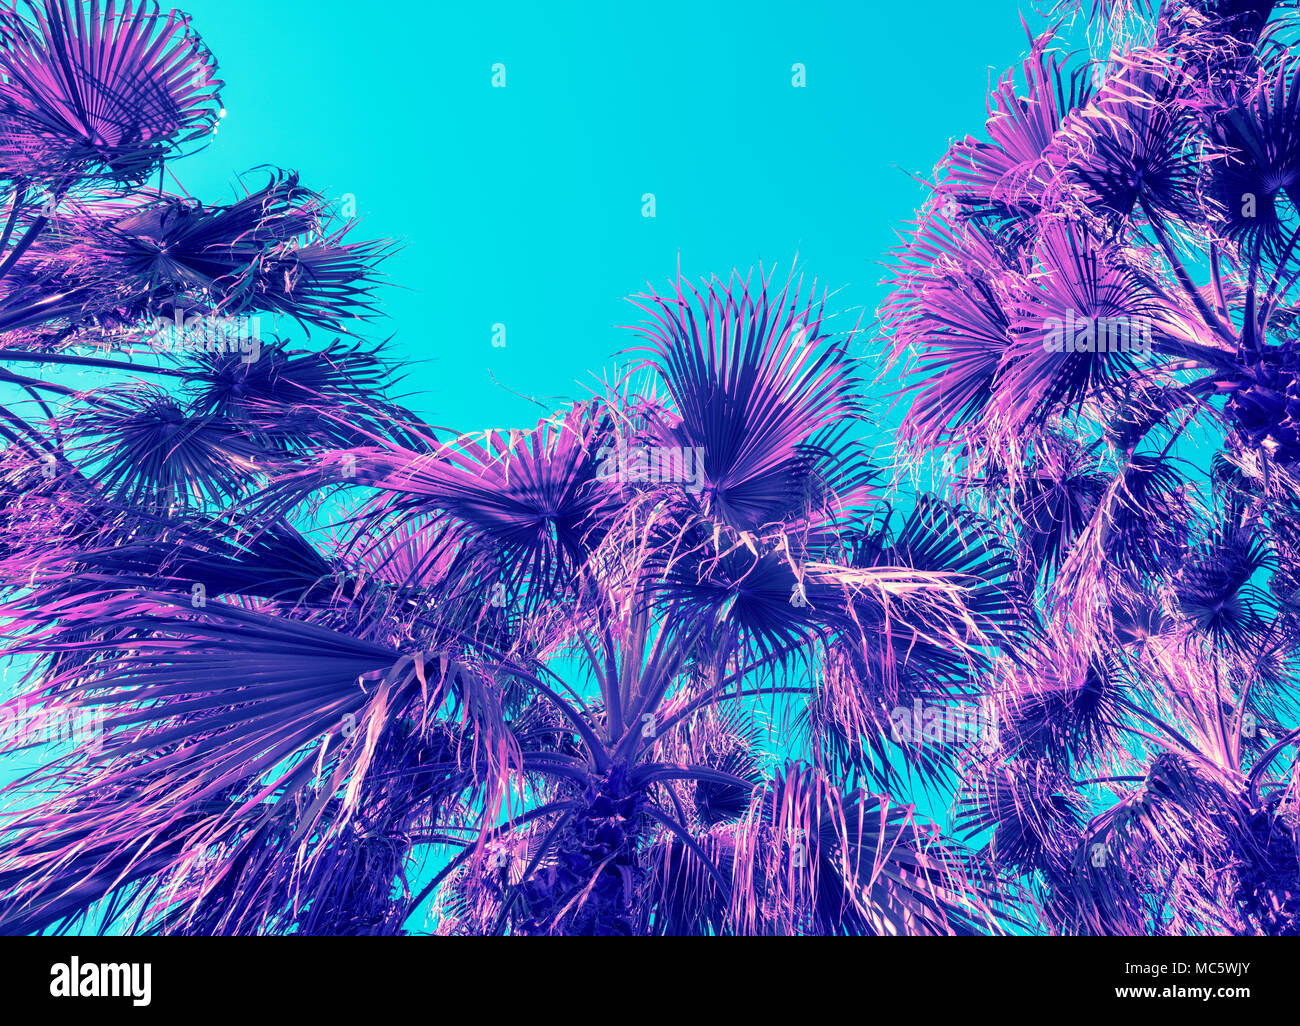 purple palm trees wallpaper